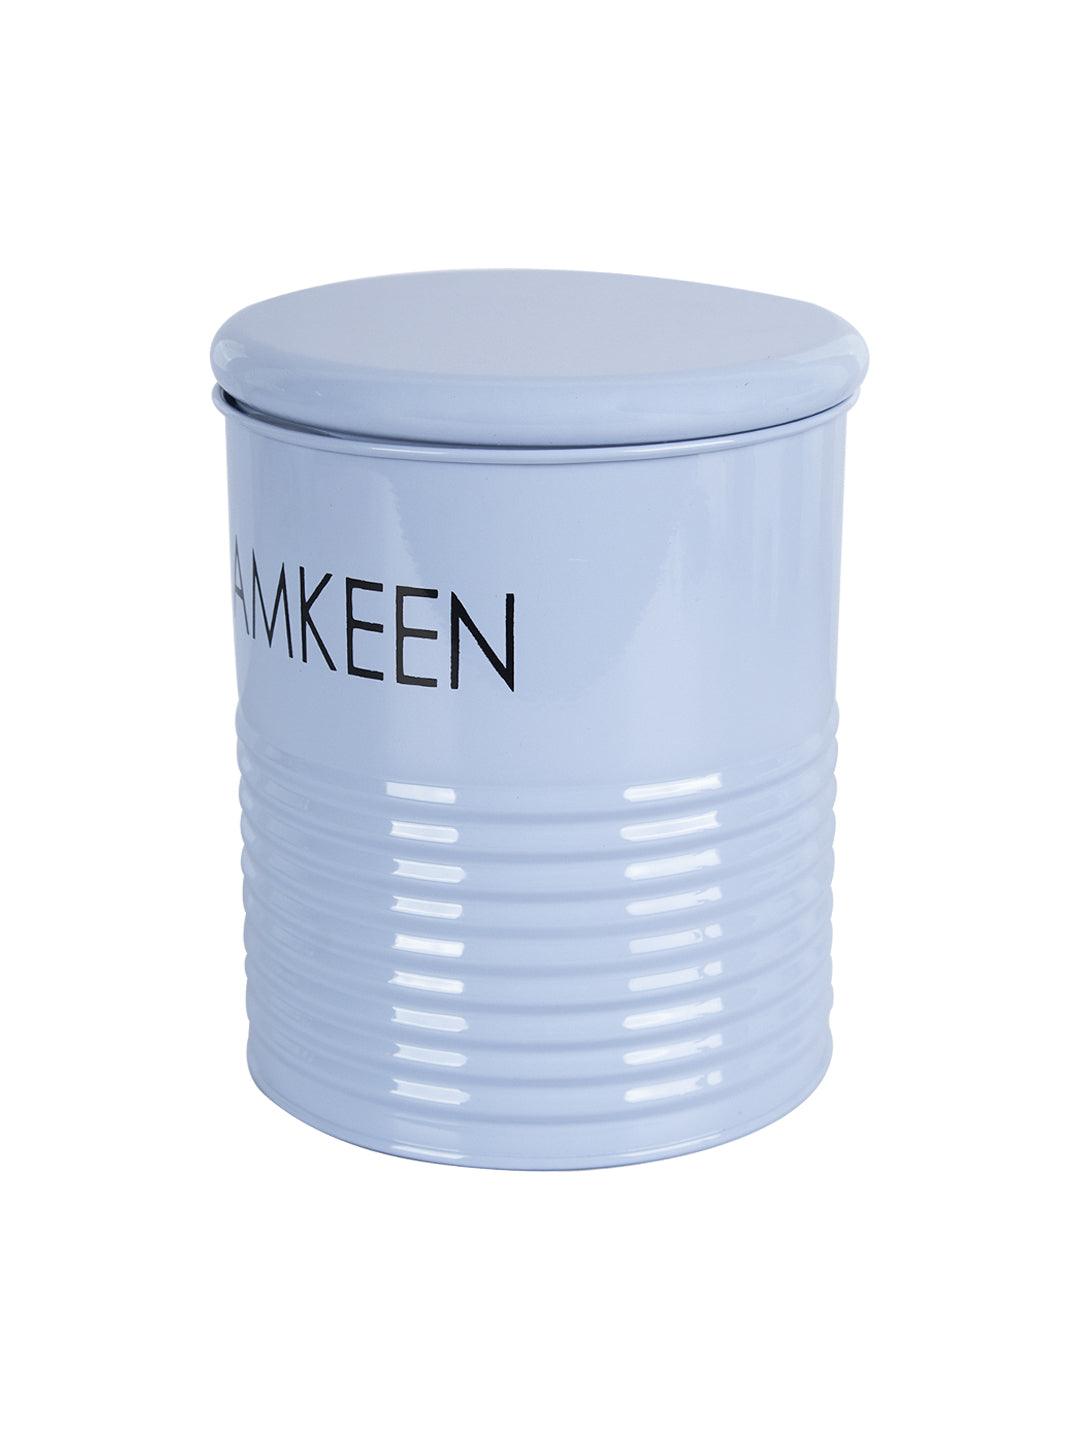 Biscuits & Namkeen Jar Set Of 2 ( Light Blue, Each 1700 Ml ) - MARKET 99